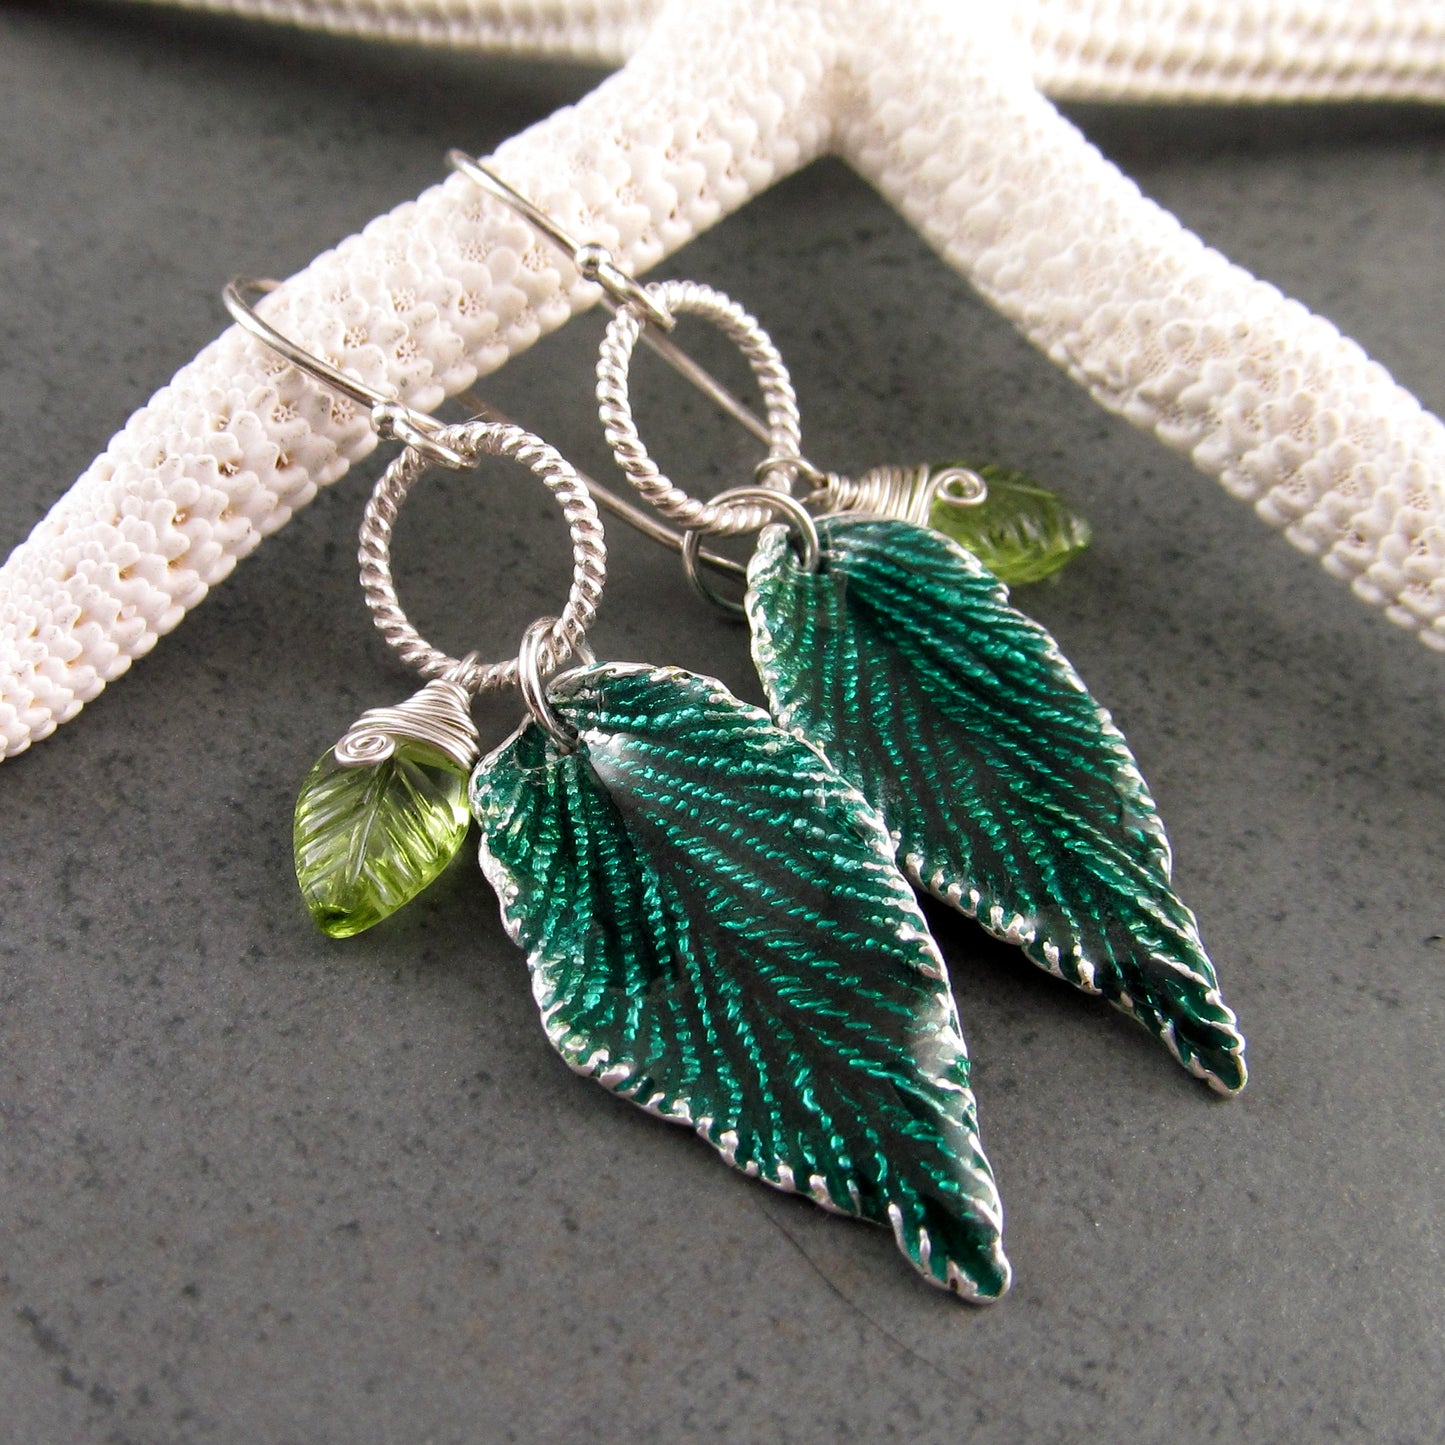 Green enamel leaf earrings, recycled fine silver and peridot